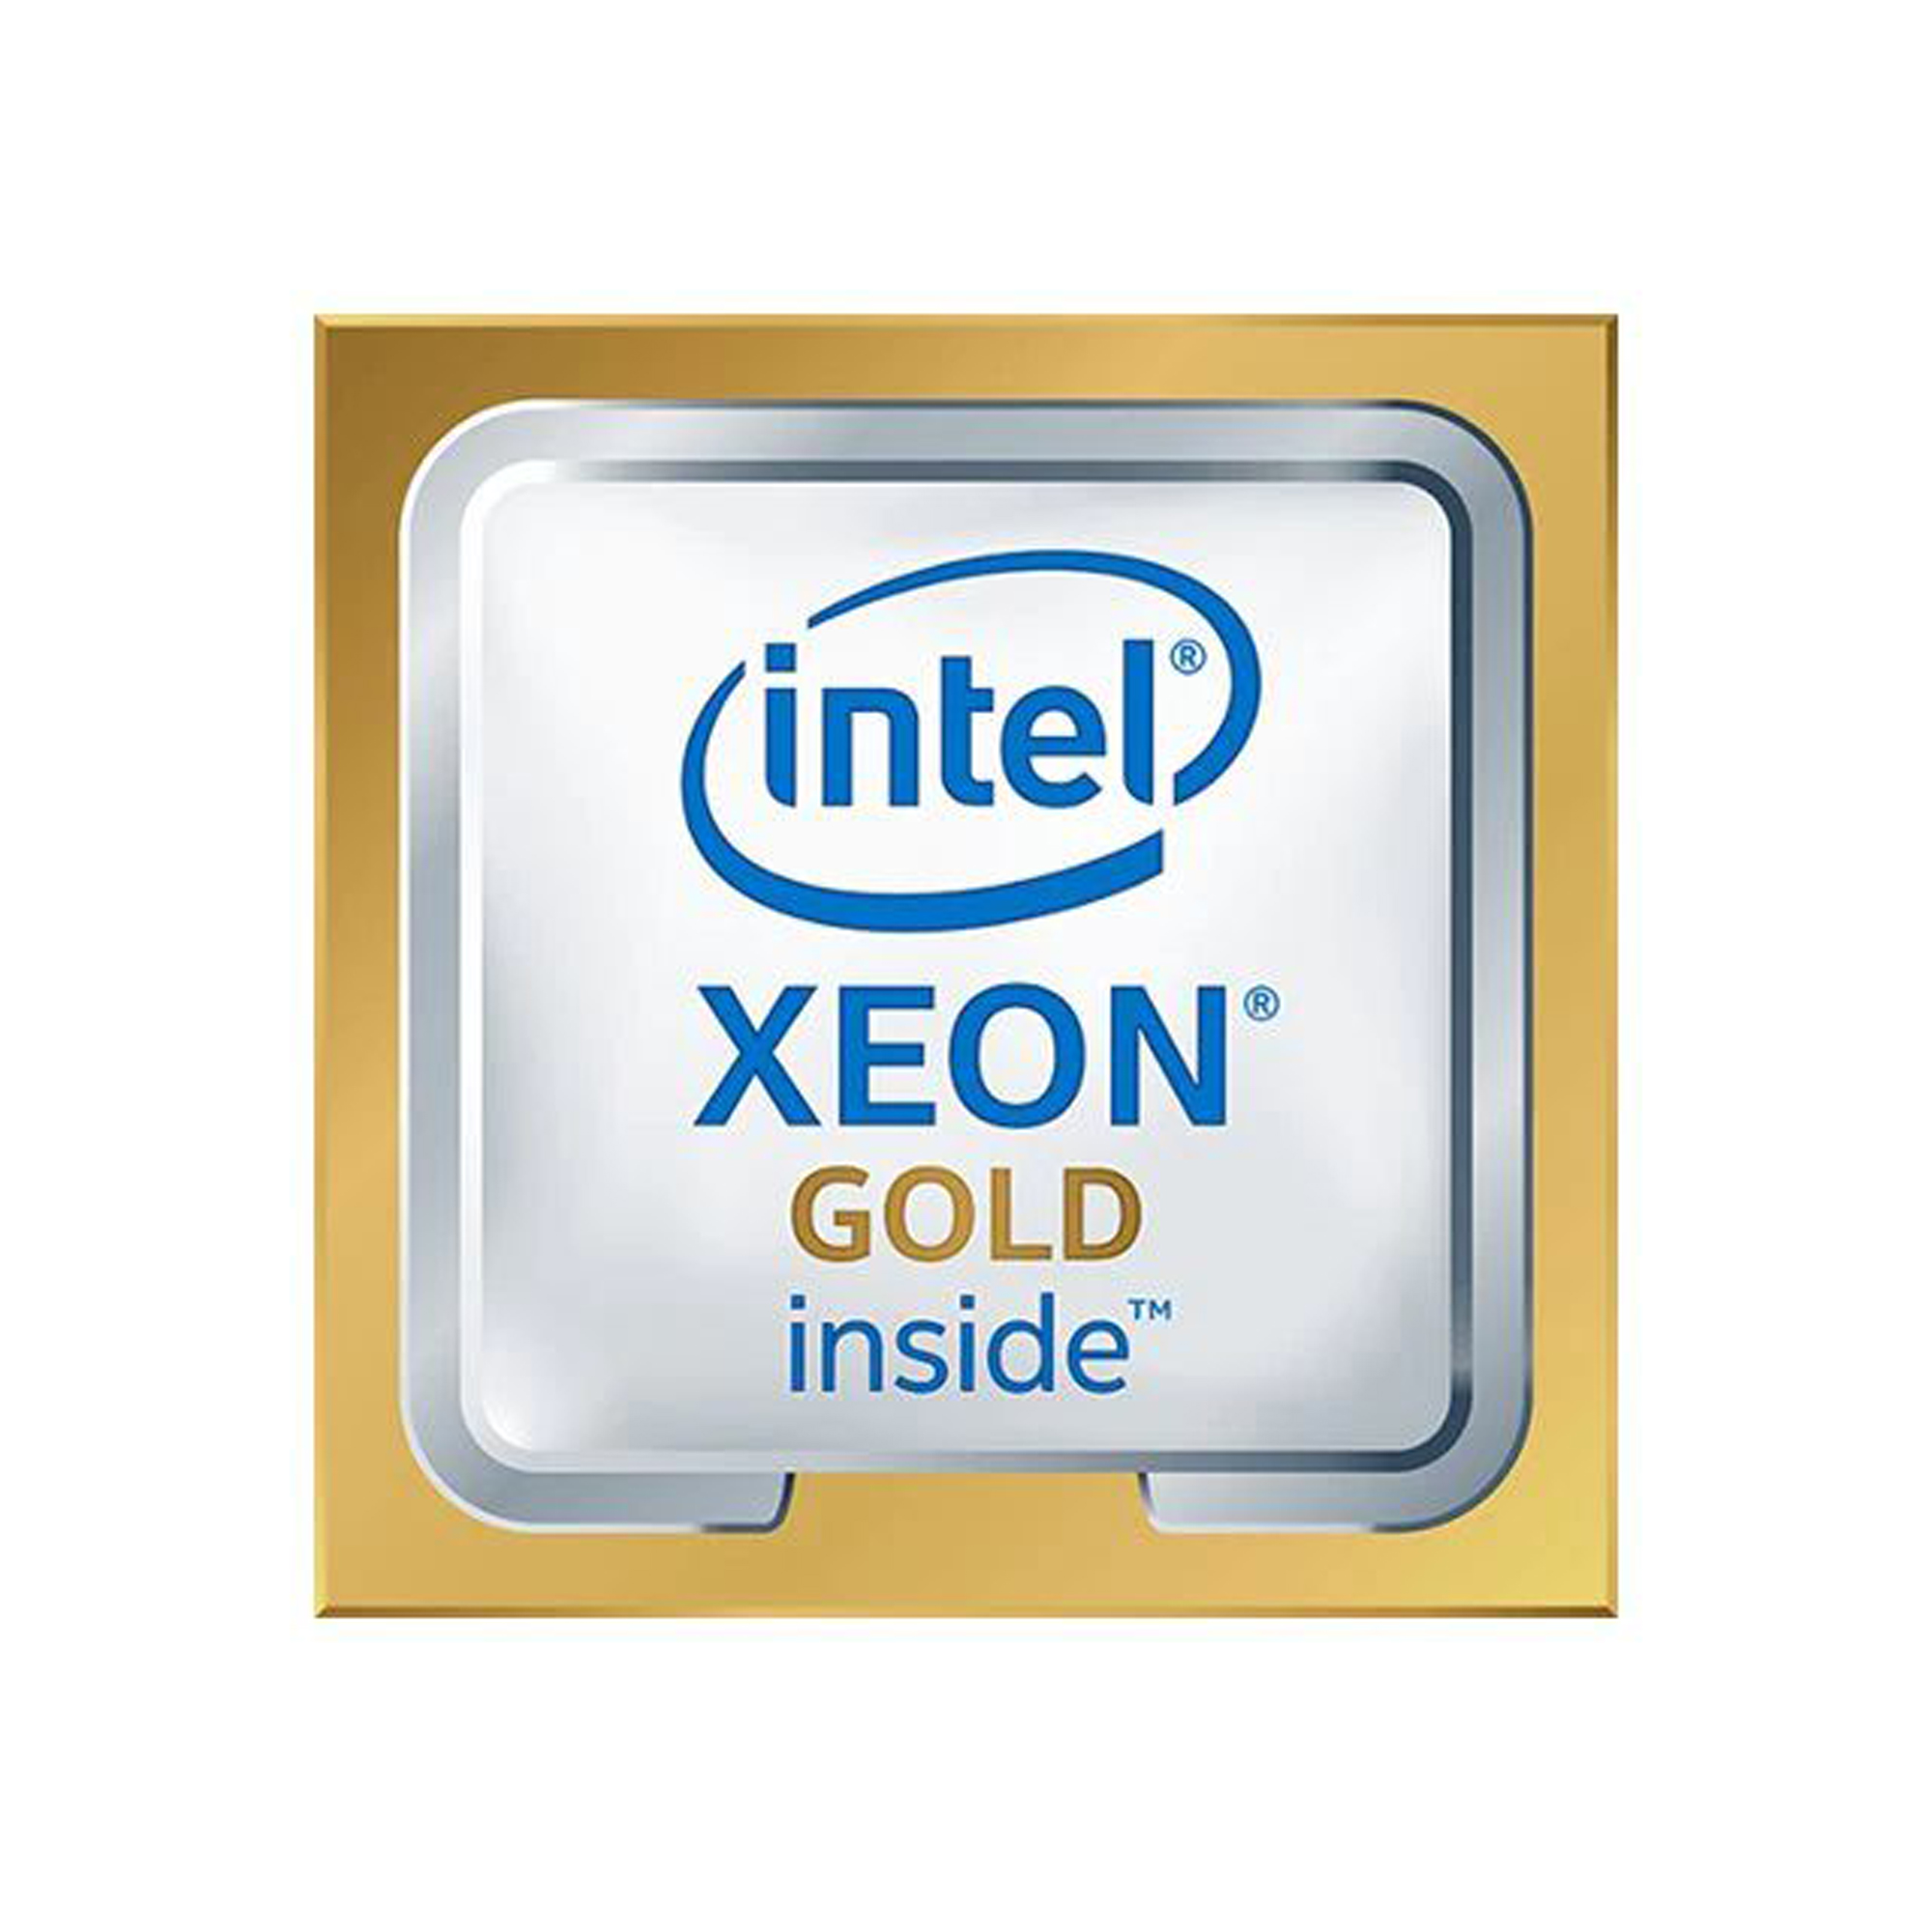 Intel Xeon Gold 5320 Ice Lake 2.2 GHz 39MB L3 Cache LGA 4189 185W BX806895320 Server Processor - image 2 of 2